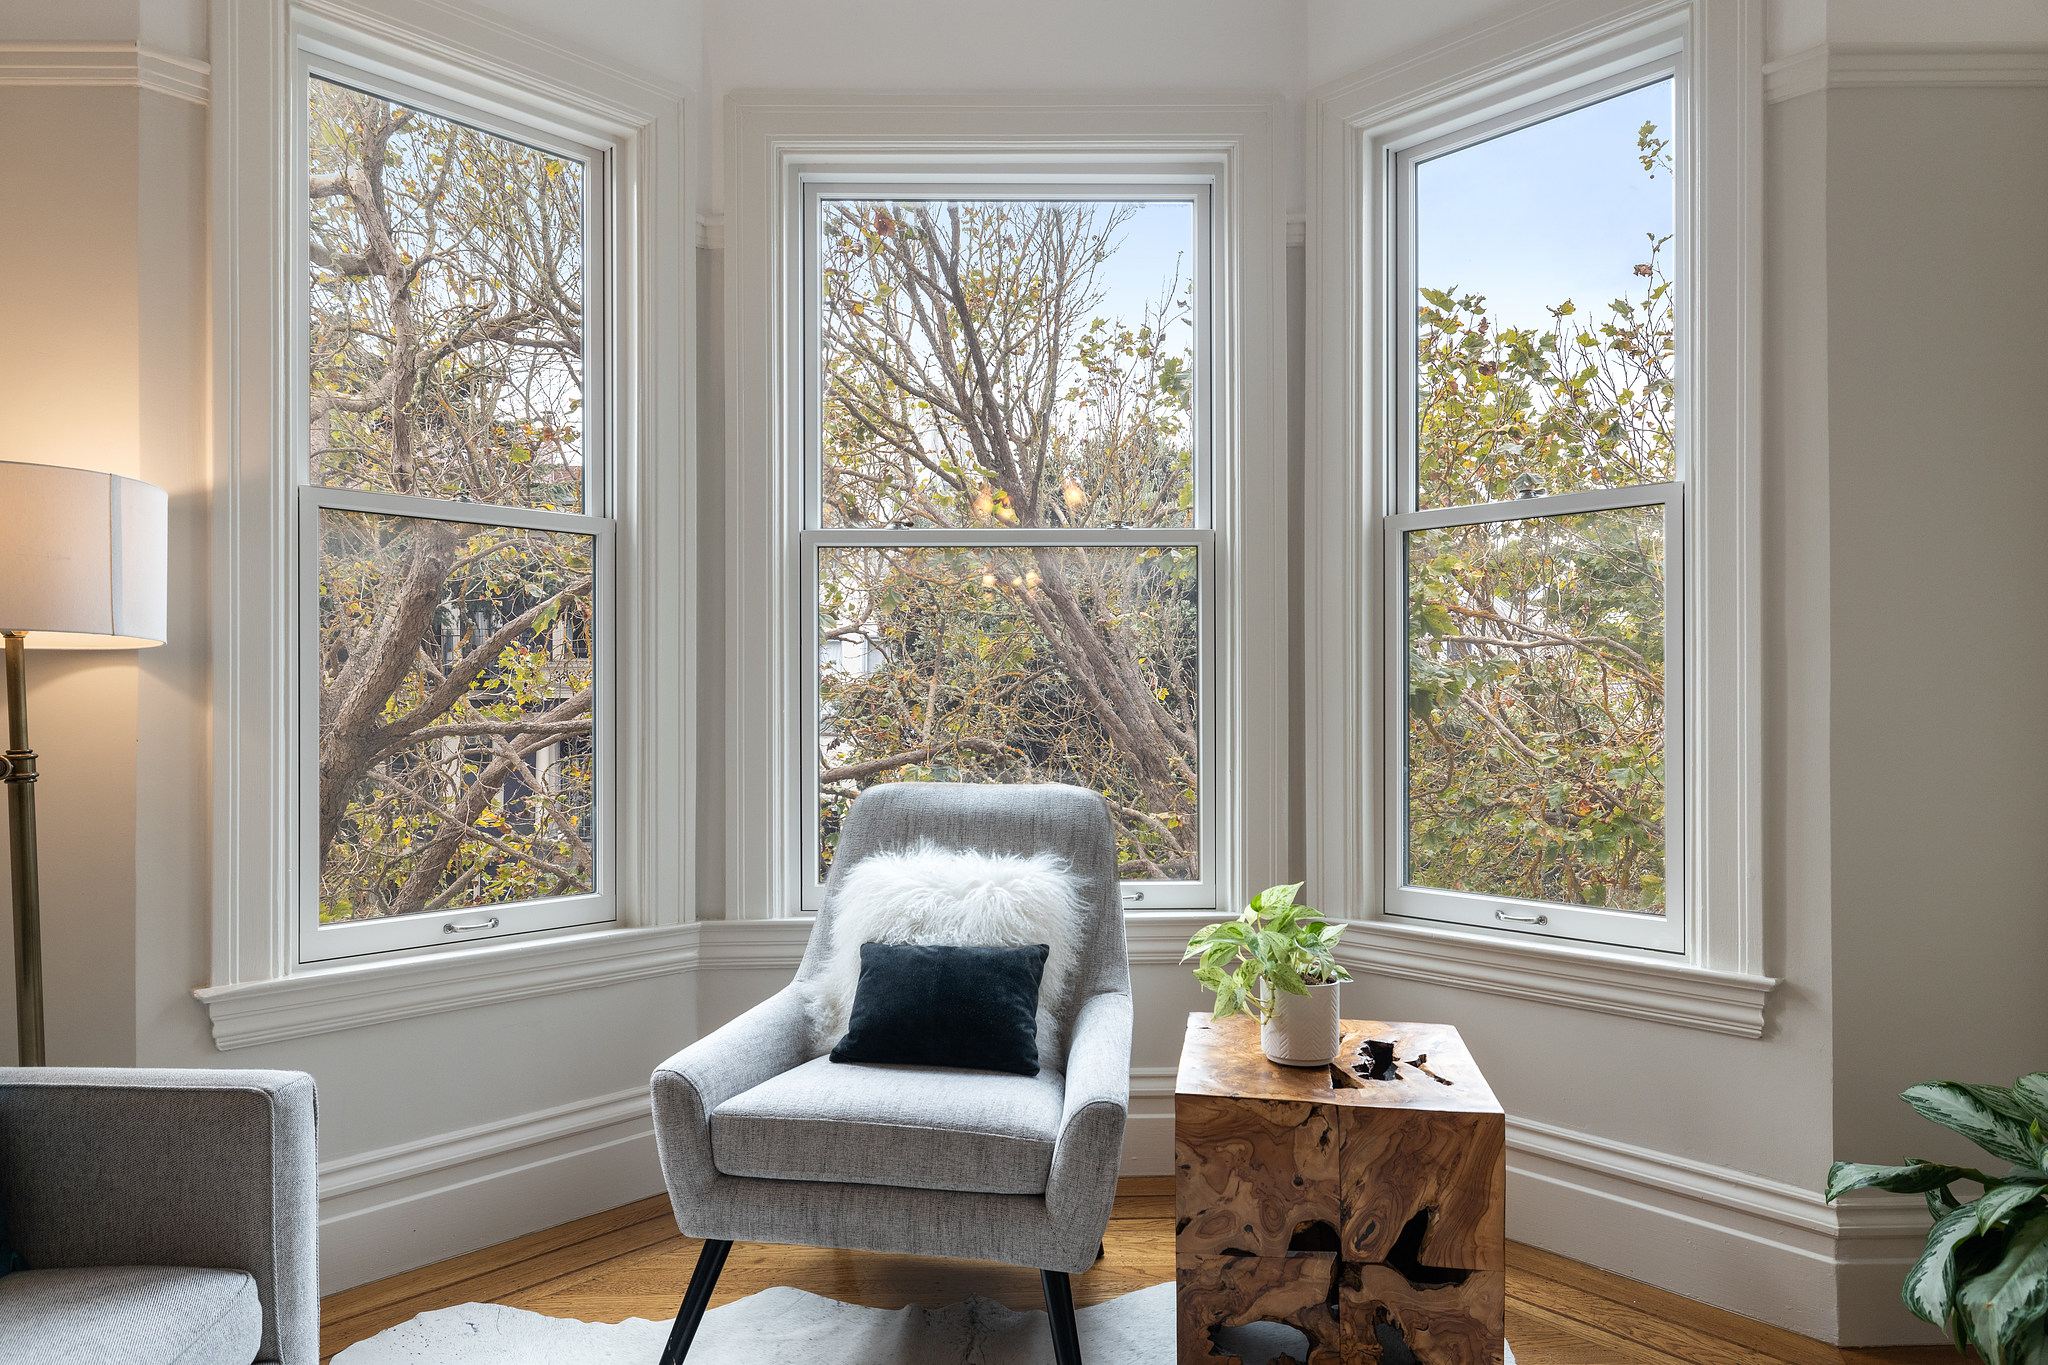 Property Photo: Seating area near three large windows